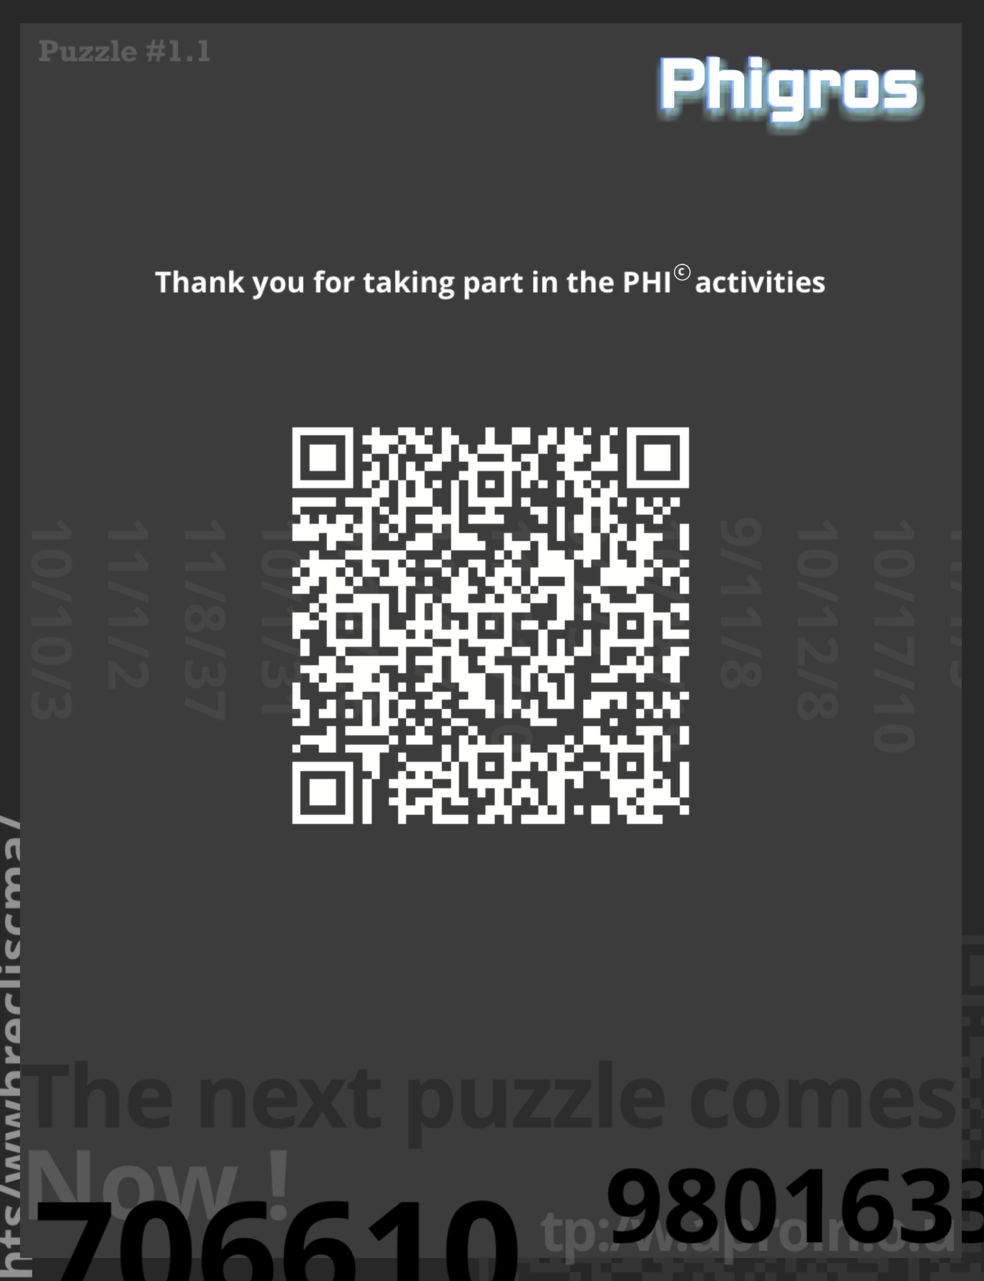 【Phigros】十七的宝藏 Puzzle #1.1谜题解密及补充